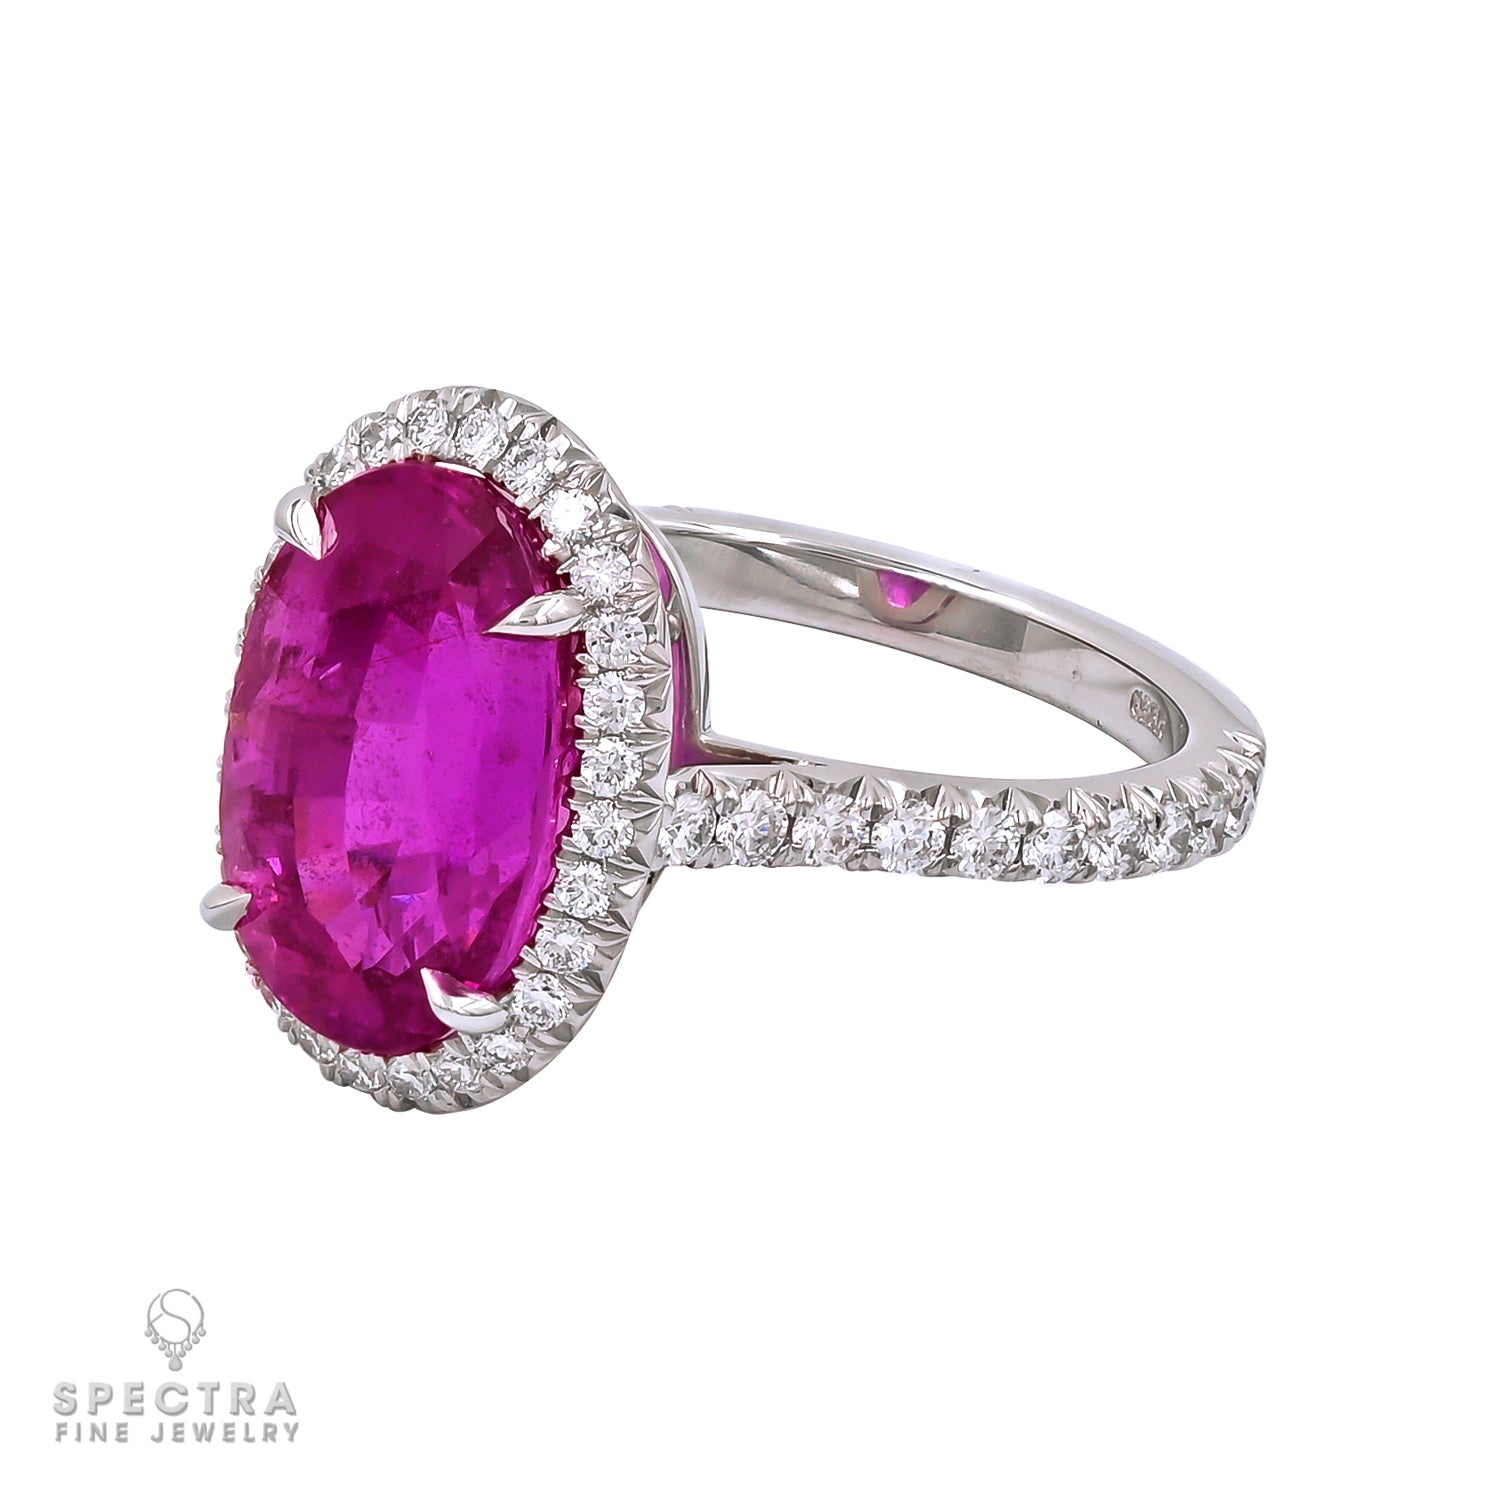 Spectra Fine Jewelry Madagascar Pink Sapphire Diamond Halo Cocktail Ring